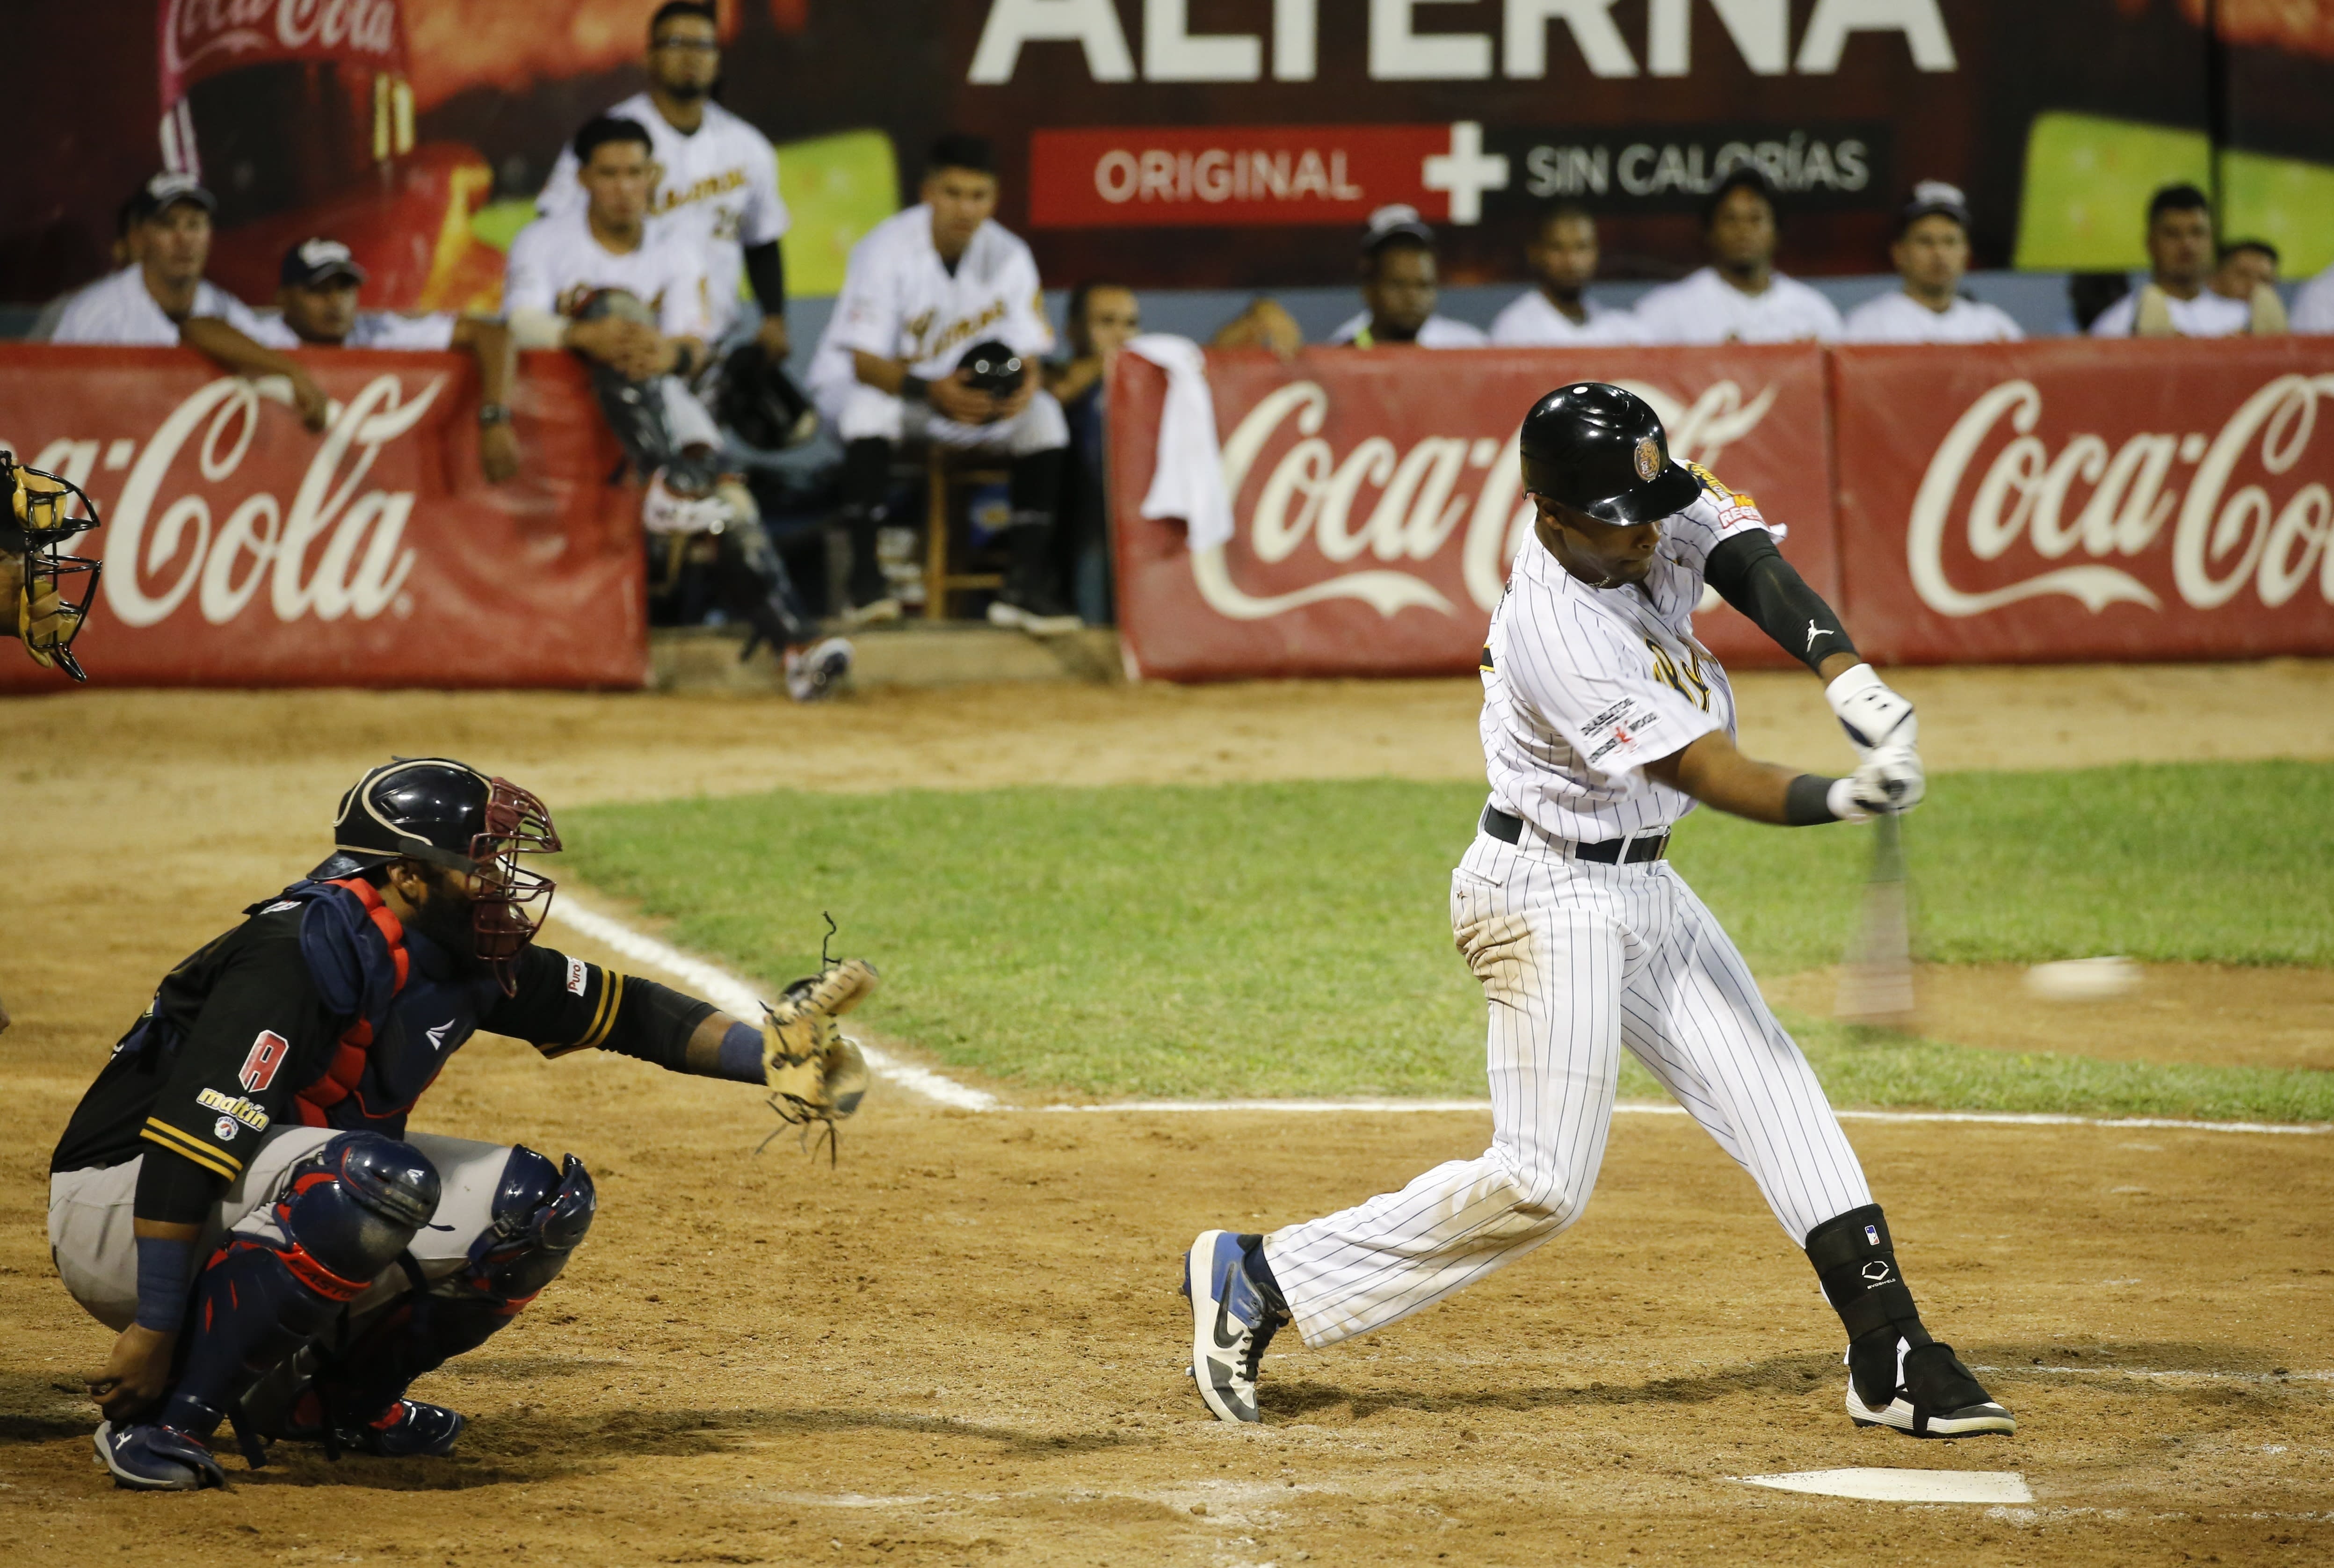 Crisis throws curve ball at opening of Venezuelan baseball